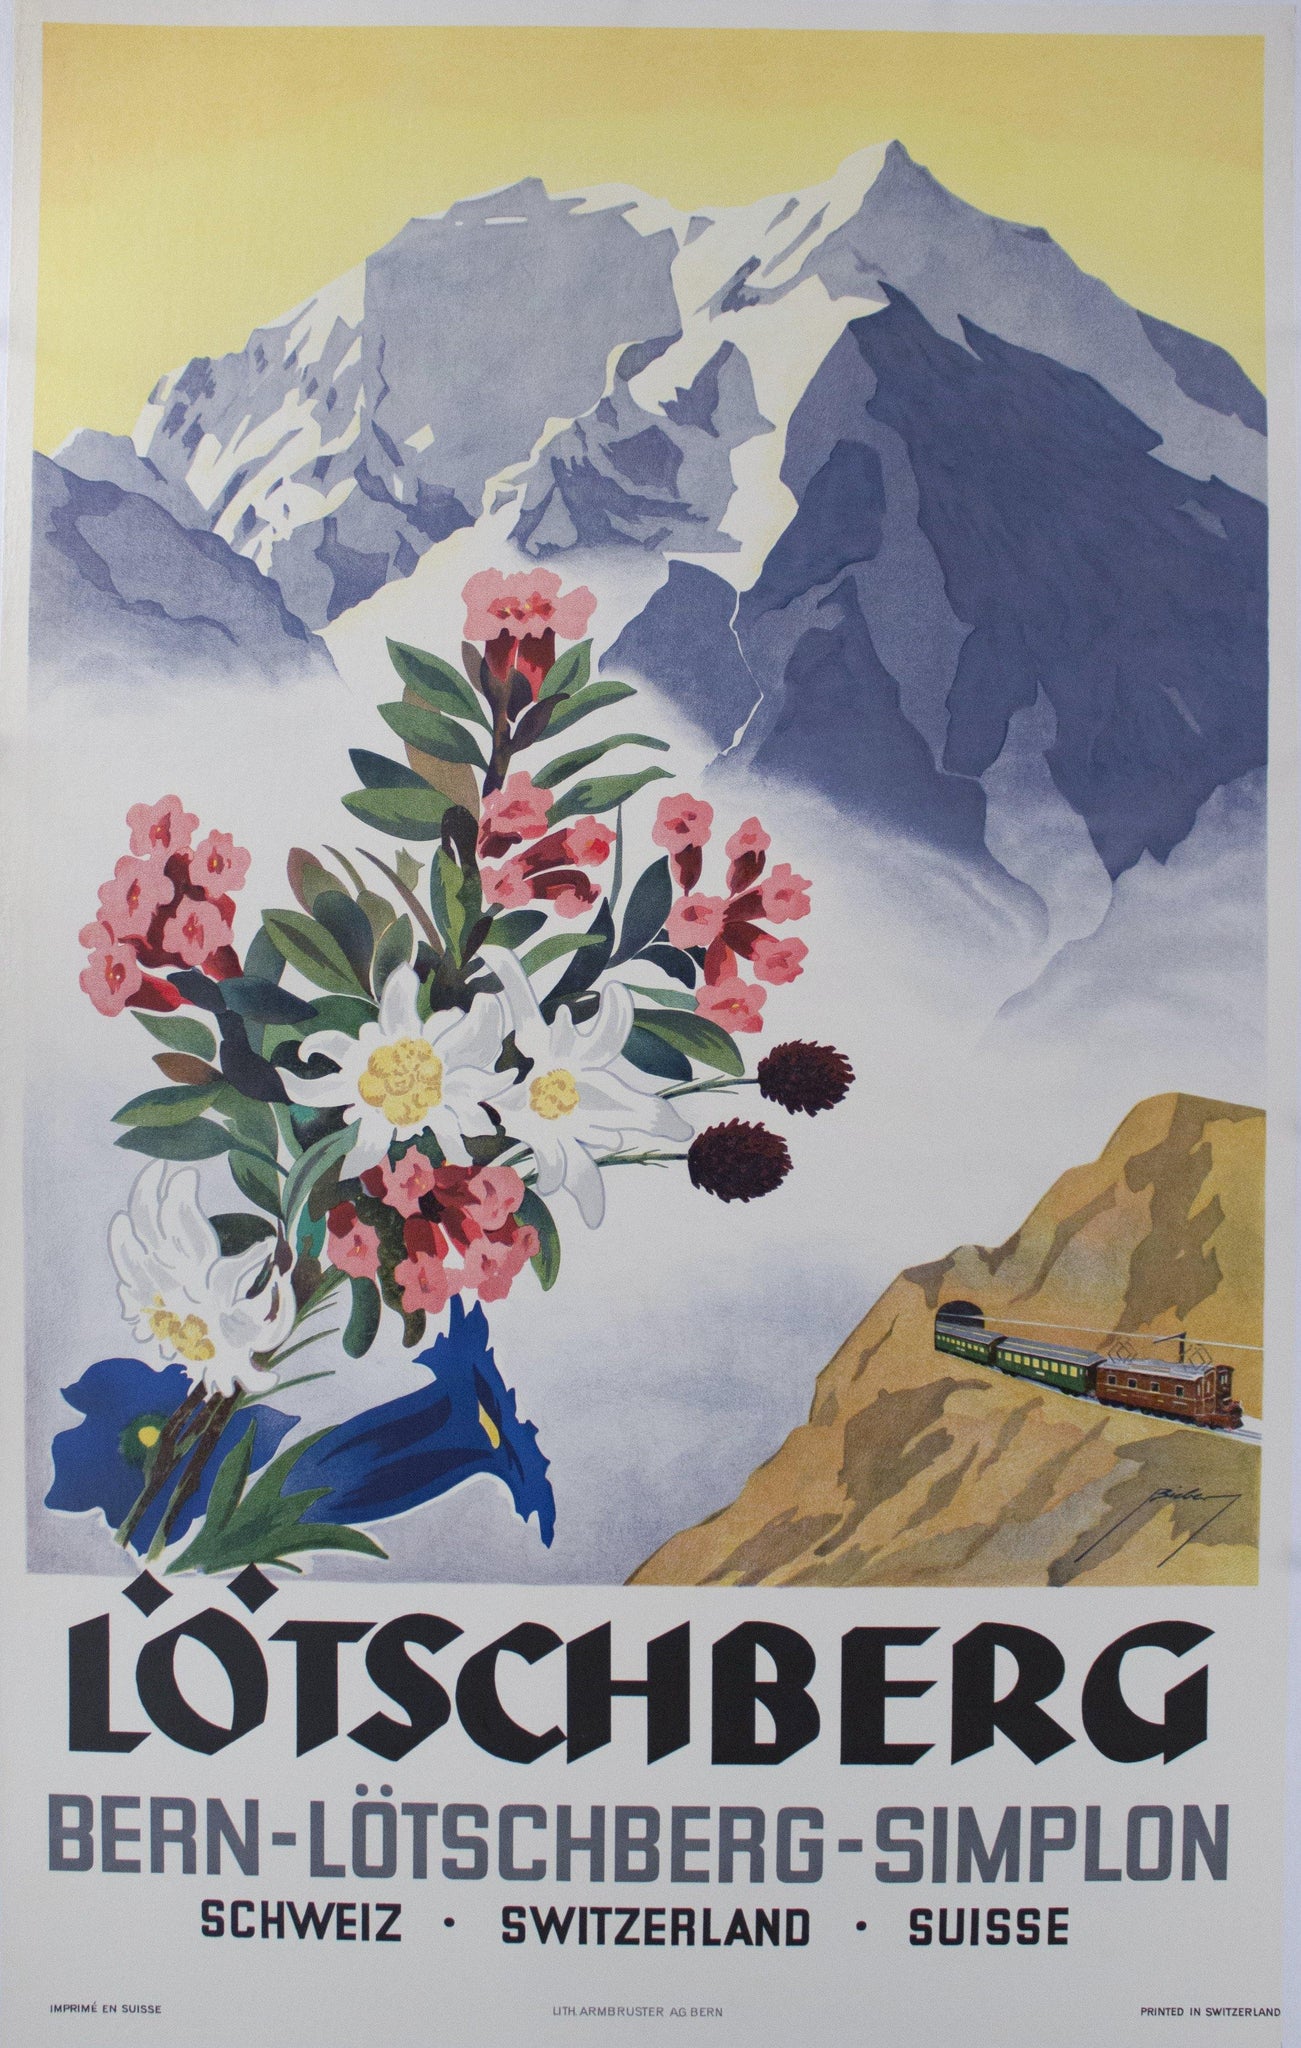 1939 Lotschberg Bern-lotschberg-Simplon Schwiz Switzerland Suisse by Armin Bieber - Golden Age Posters